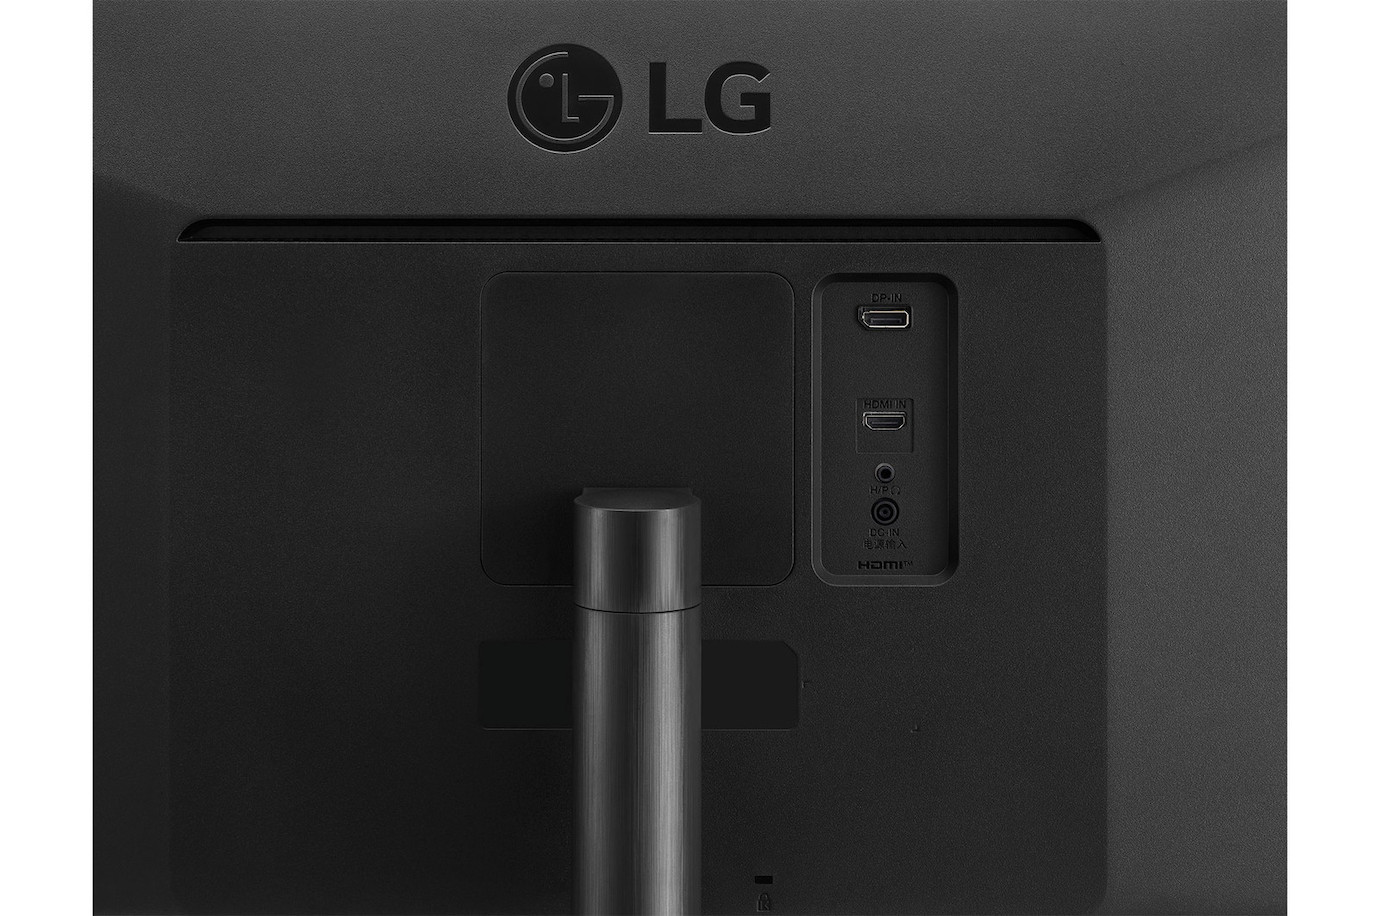 Vorschau: LG 34WQ500-B UltraWide 34" IPS Monitor